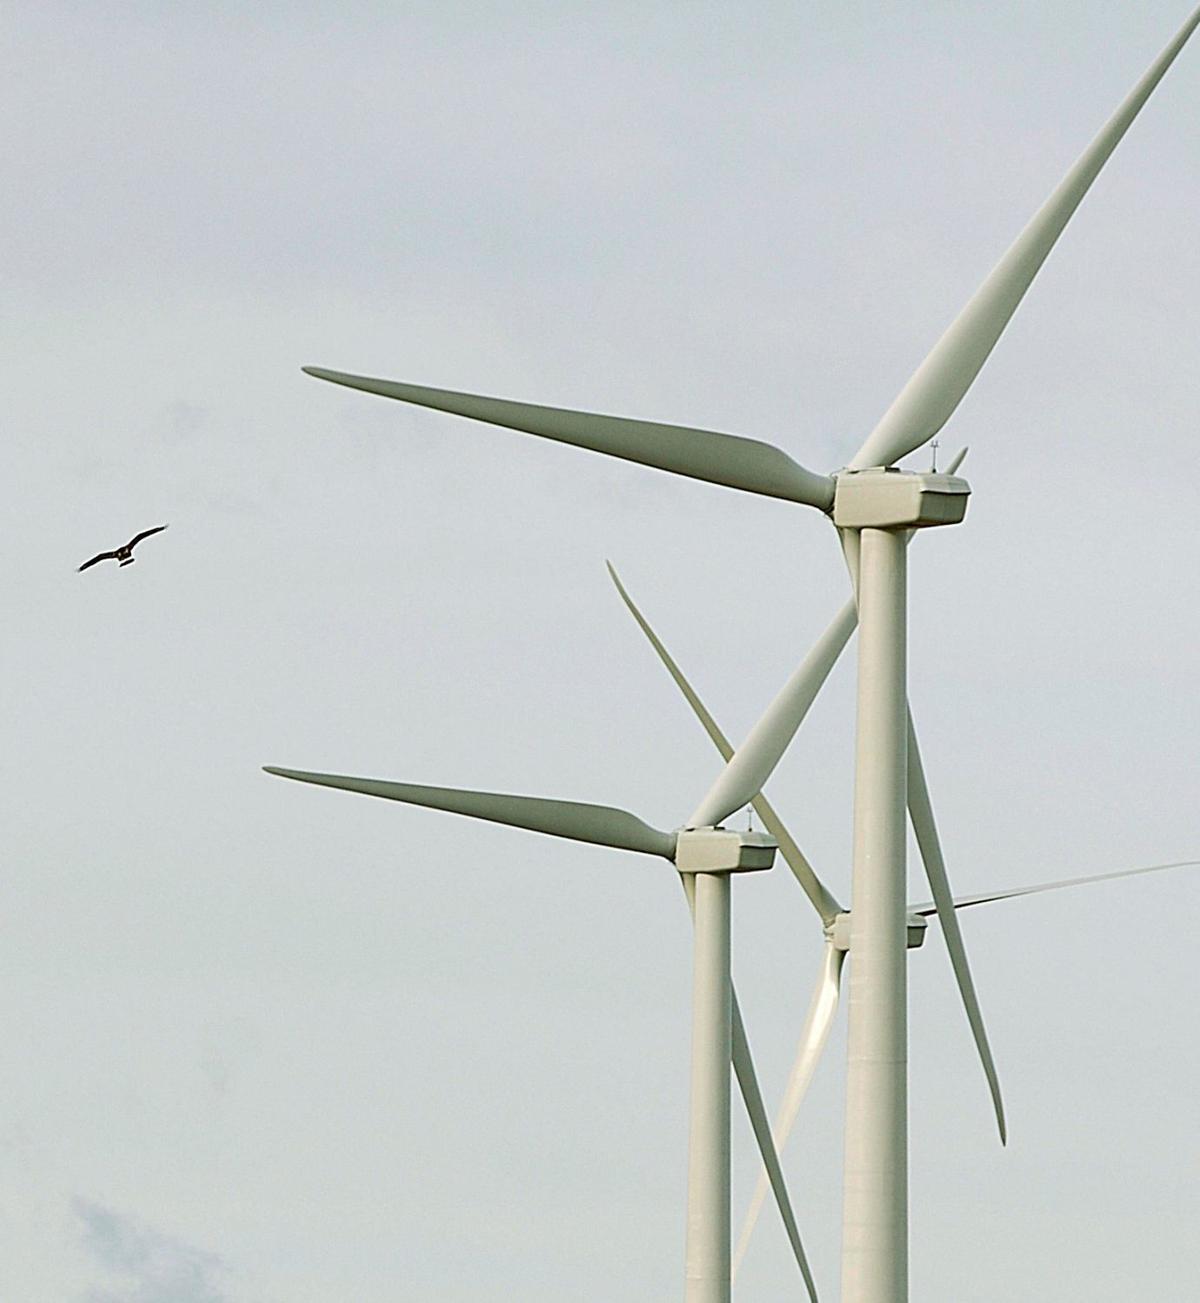 Minnesota Company To Build 30 Turbine Wind Farm In Central Montana